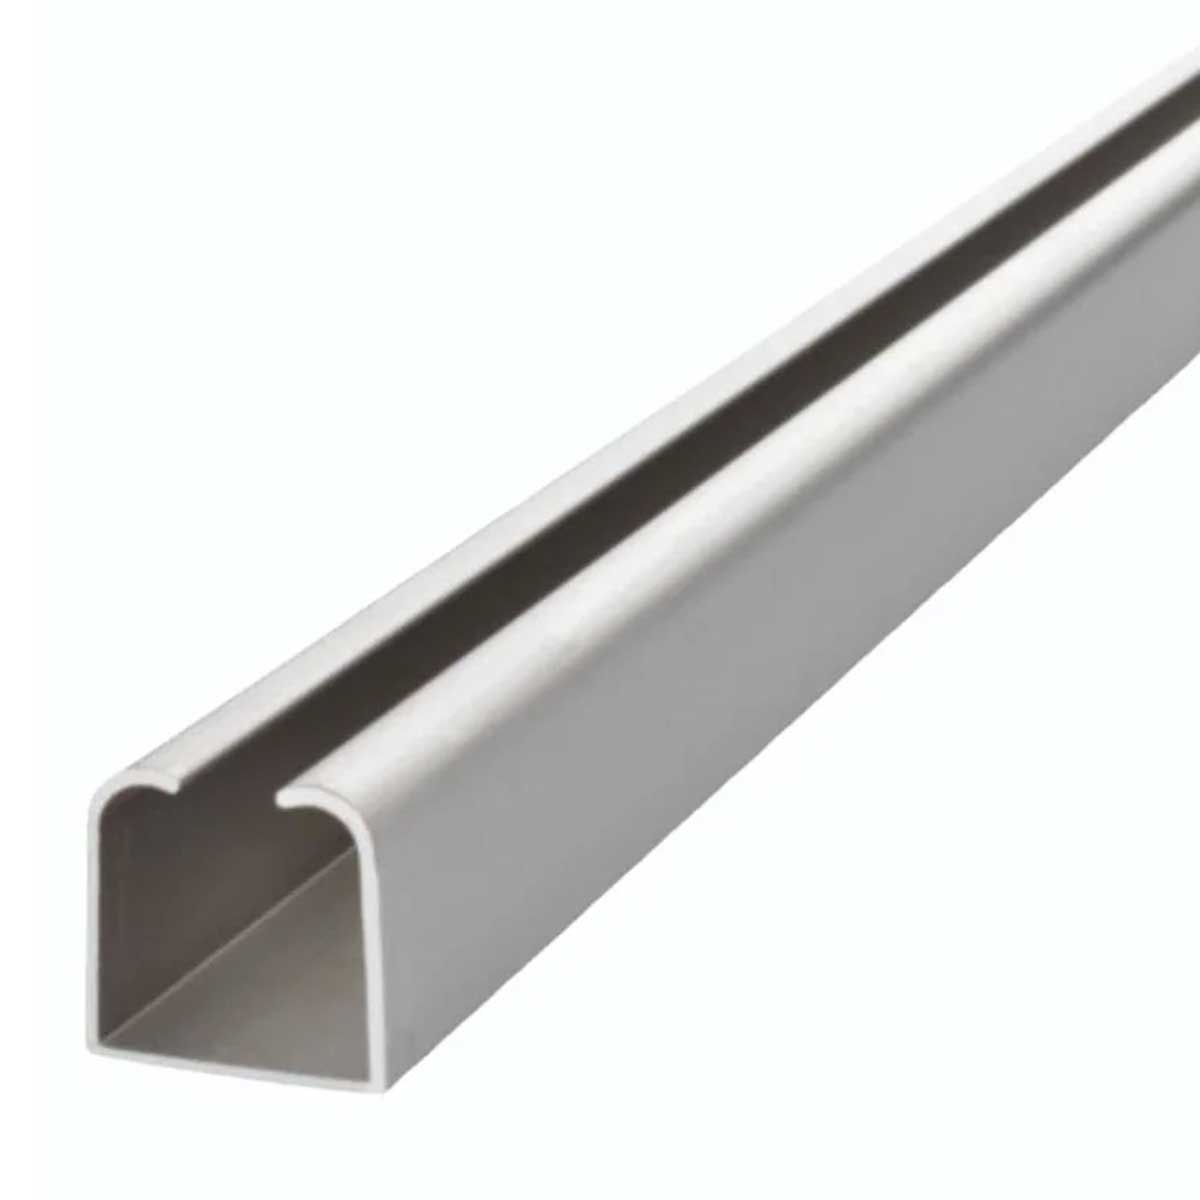 Sliding Door Aluminium C Channel Profile Manufacturers, Suppliers in Ganderbal